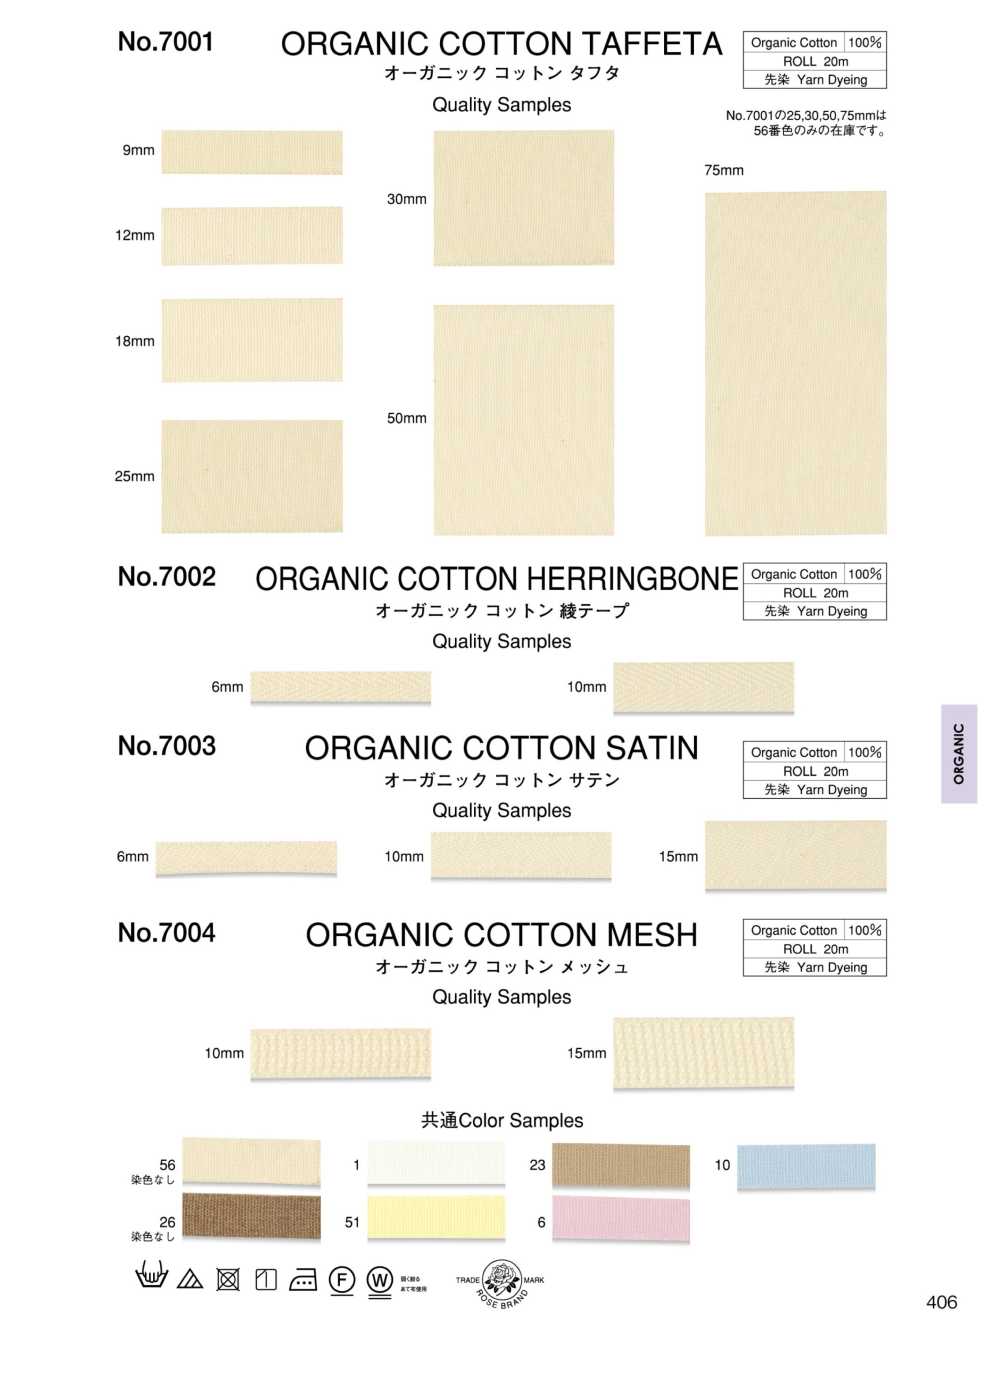 7004 Organic Cotton Mesh[Ribbon Tape Cord] ROSE BRAND (Marushin)